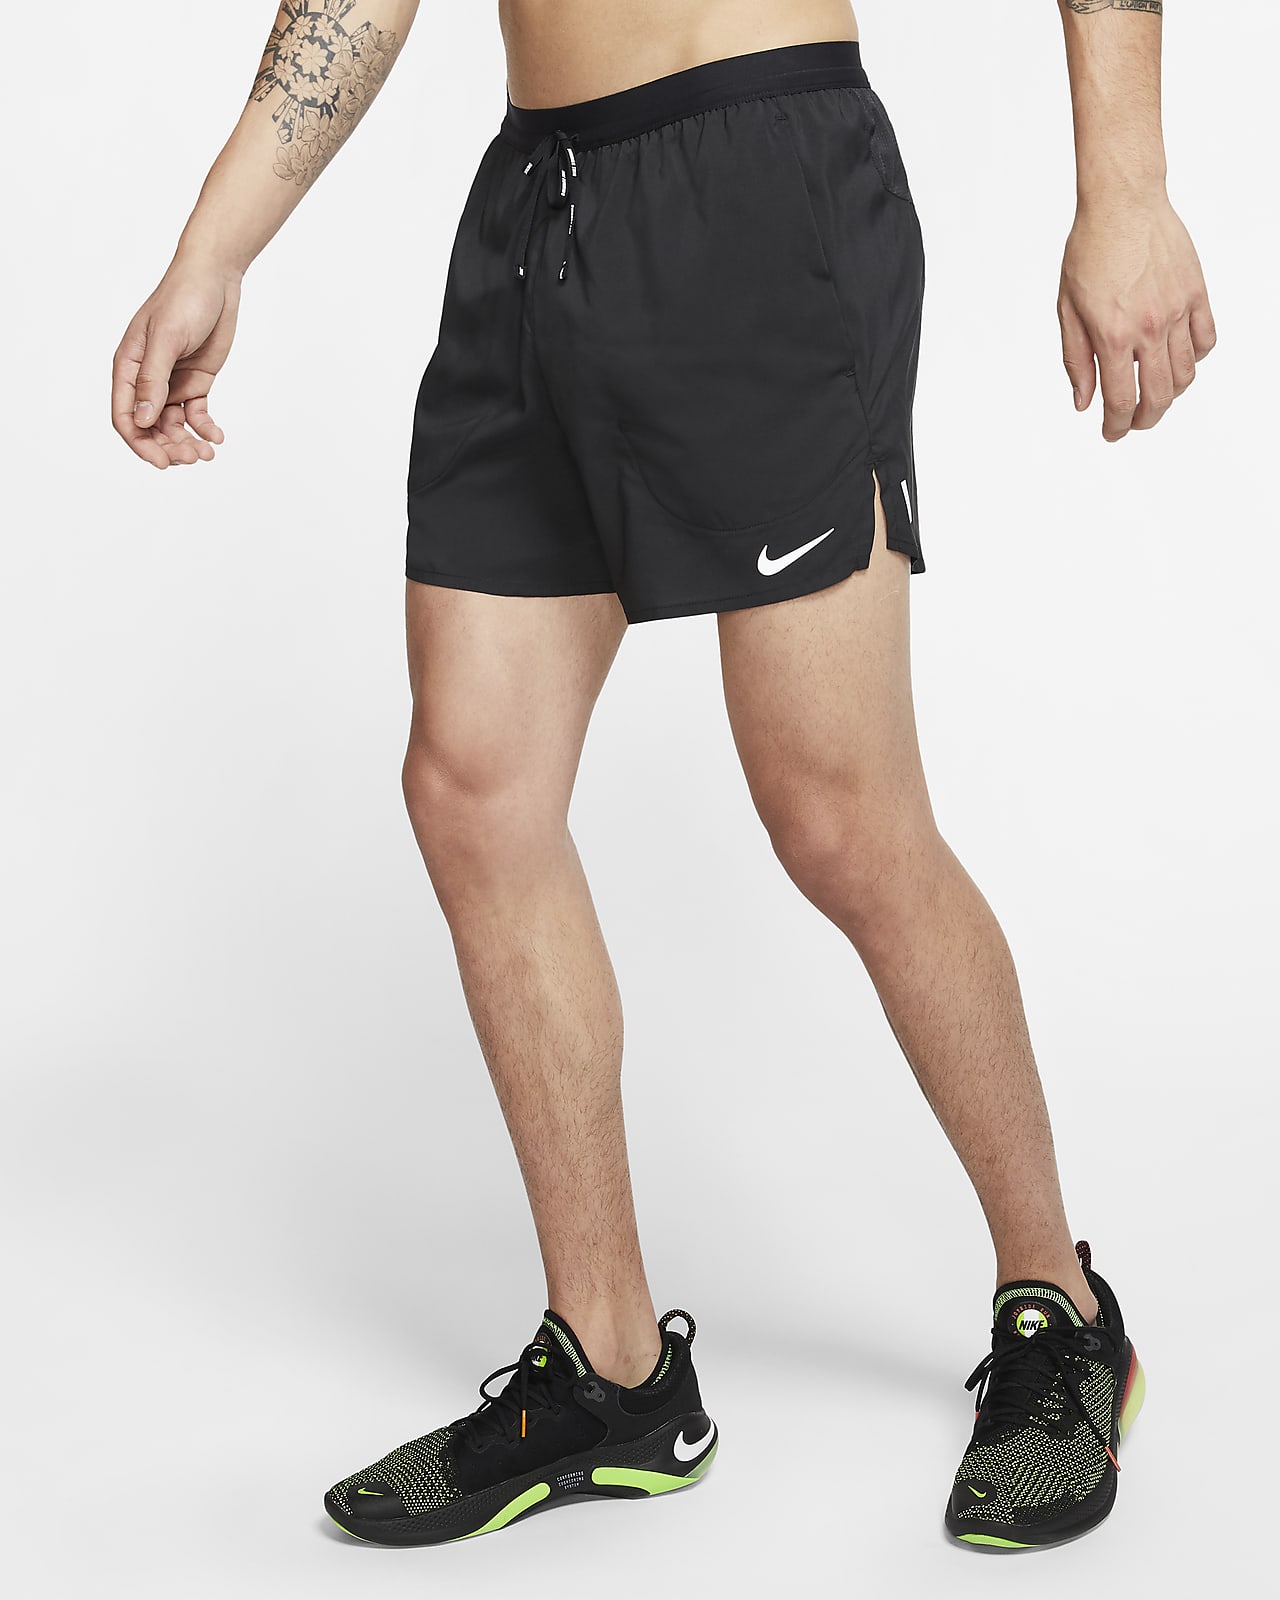 flex stride performance athletic shorts